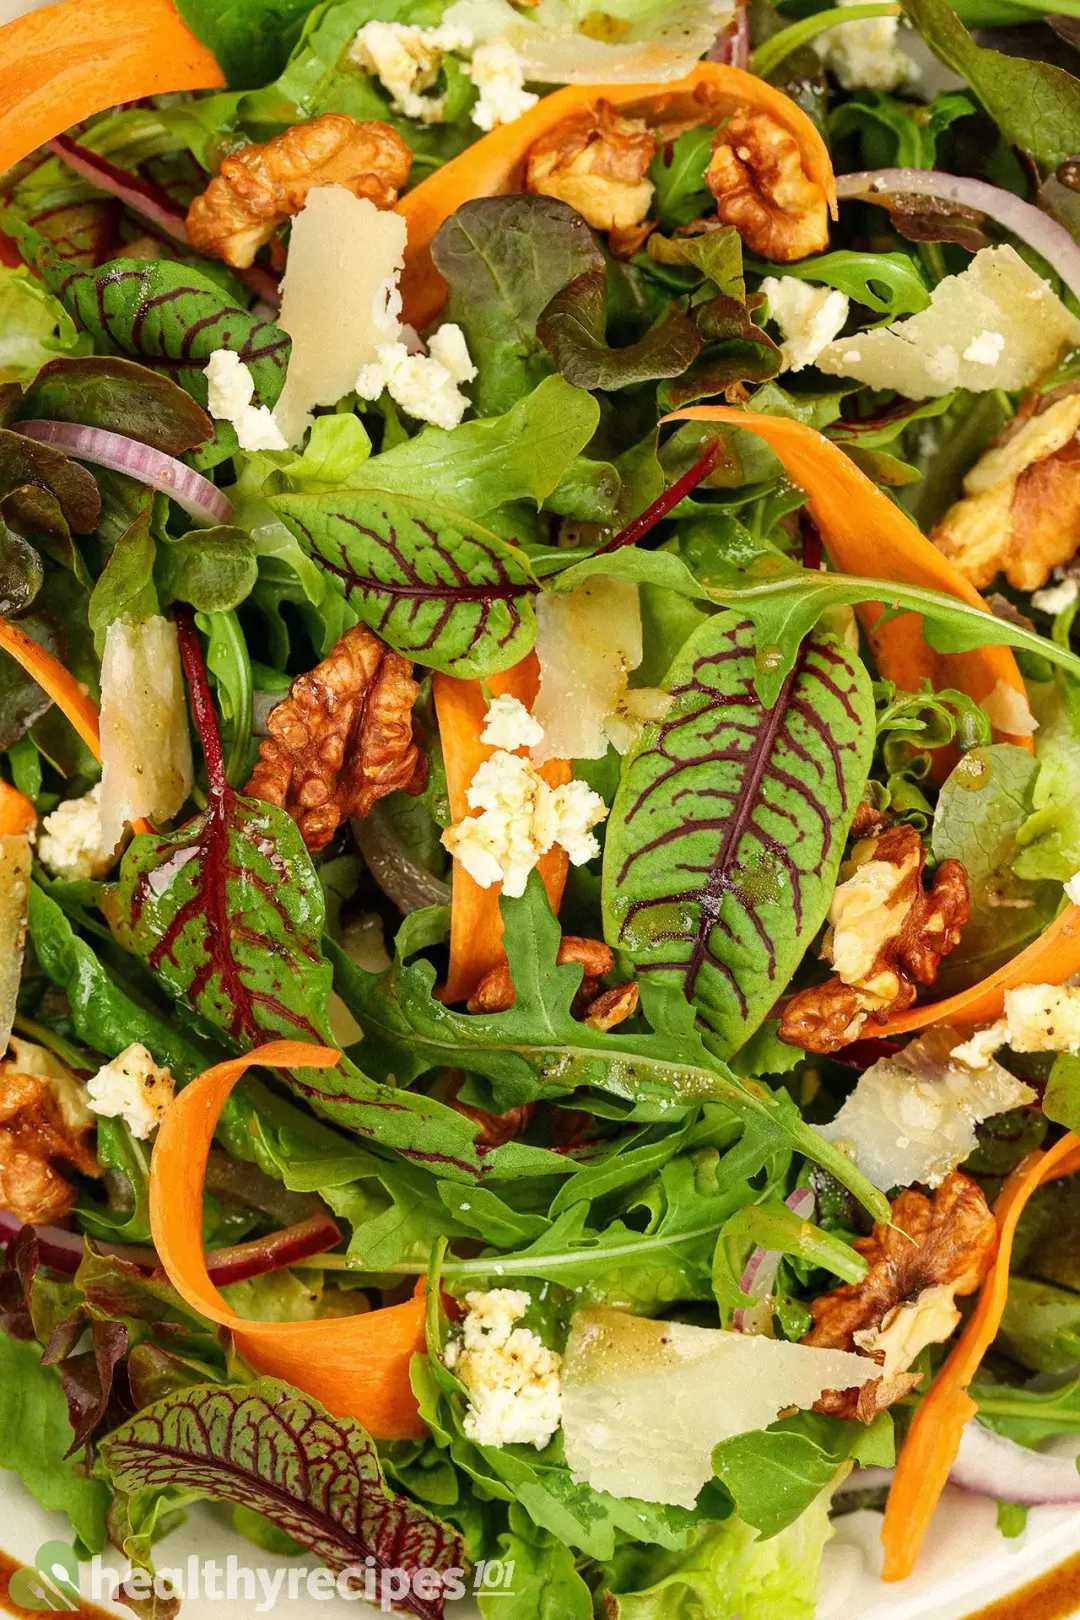 Is Salad Mix Healthy